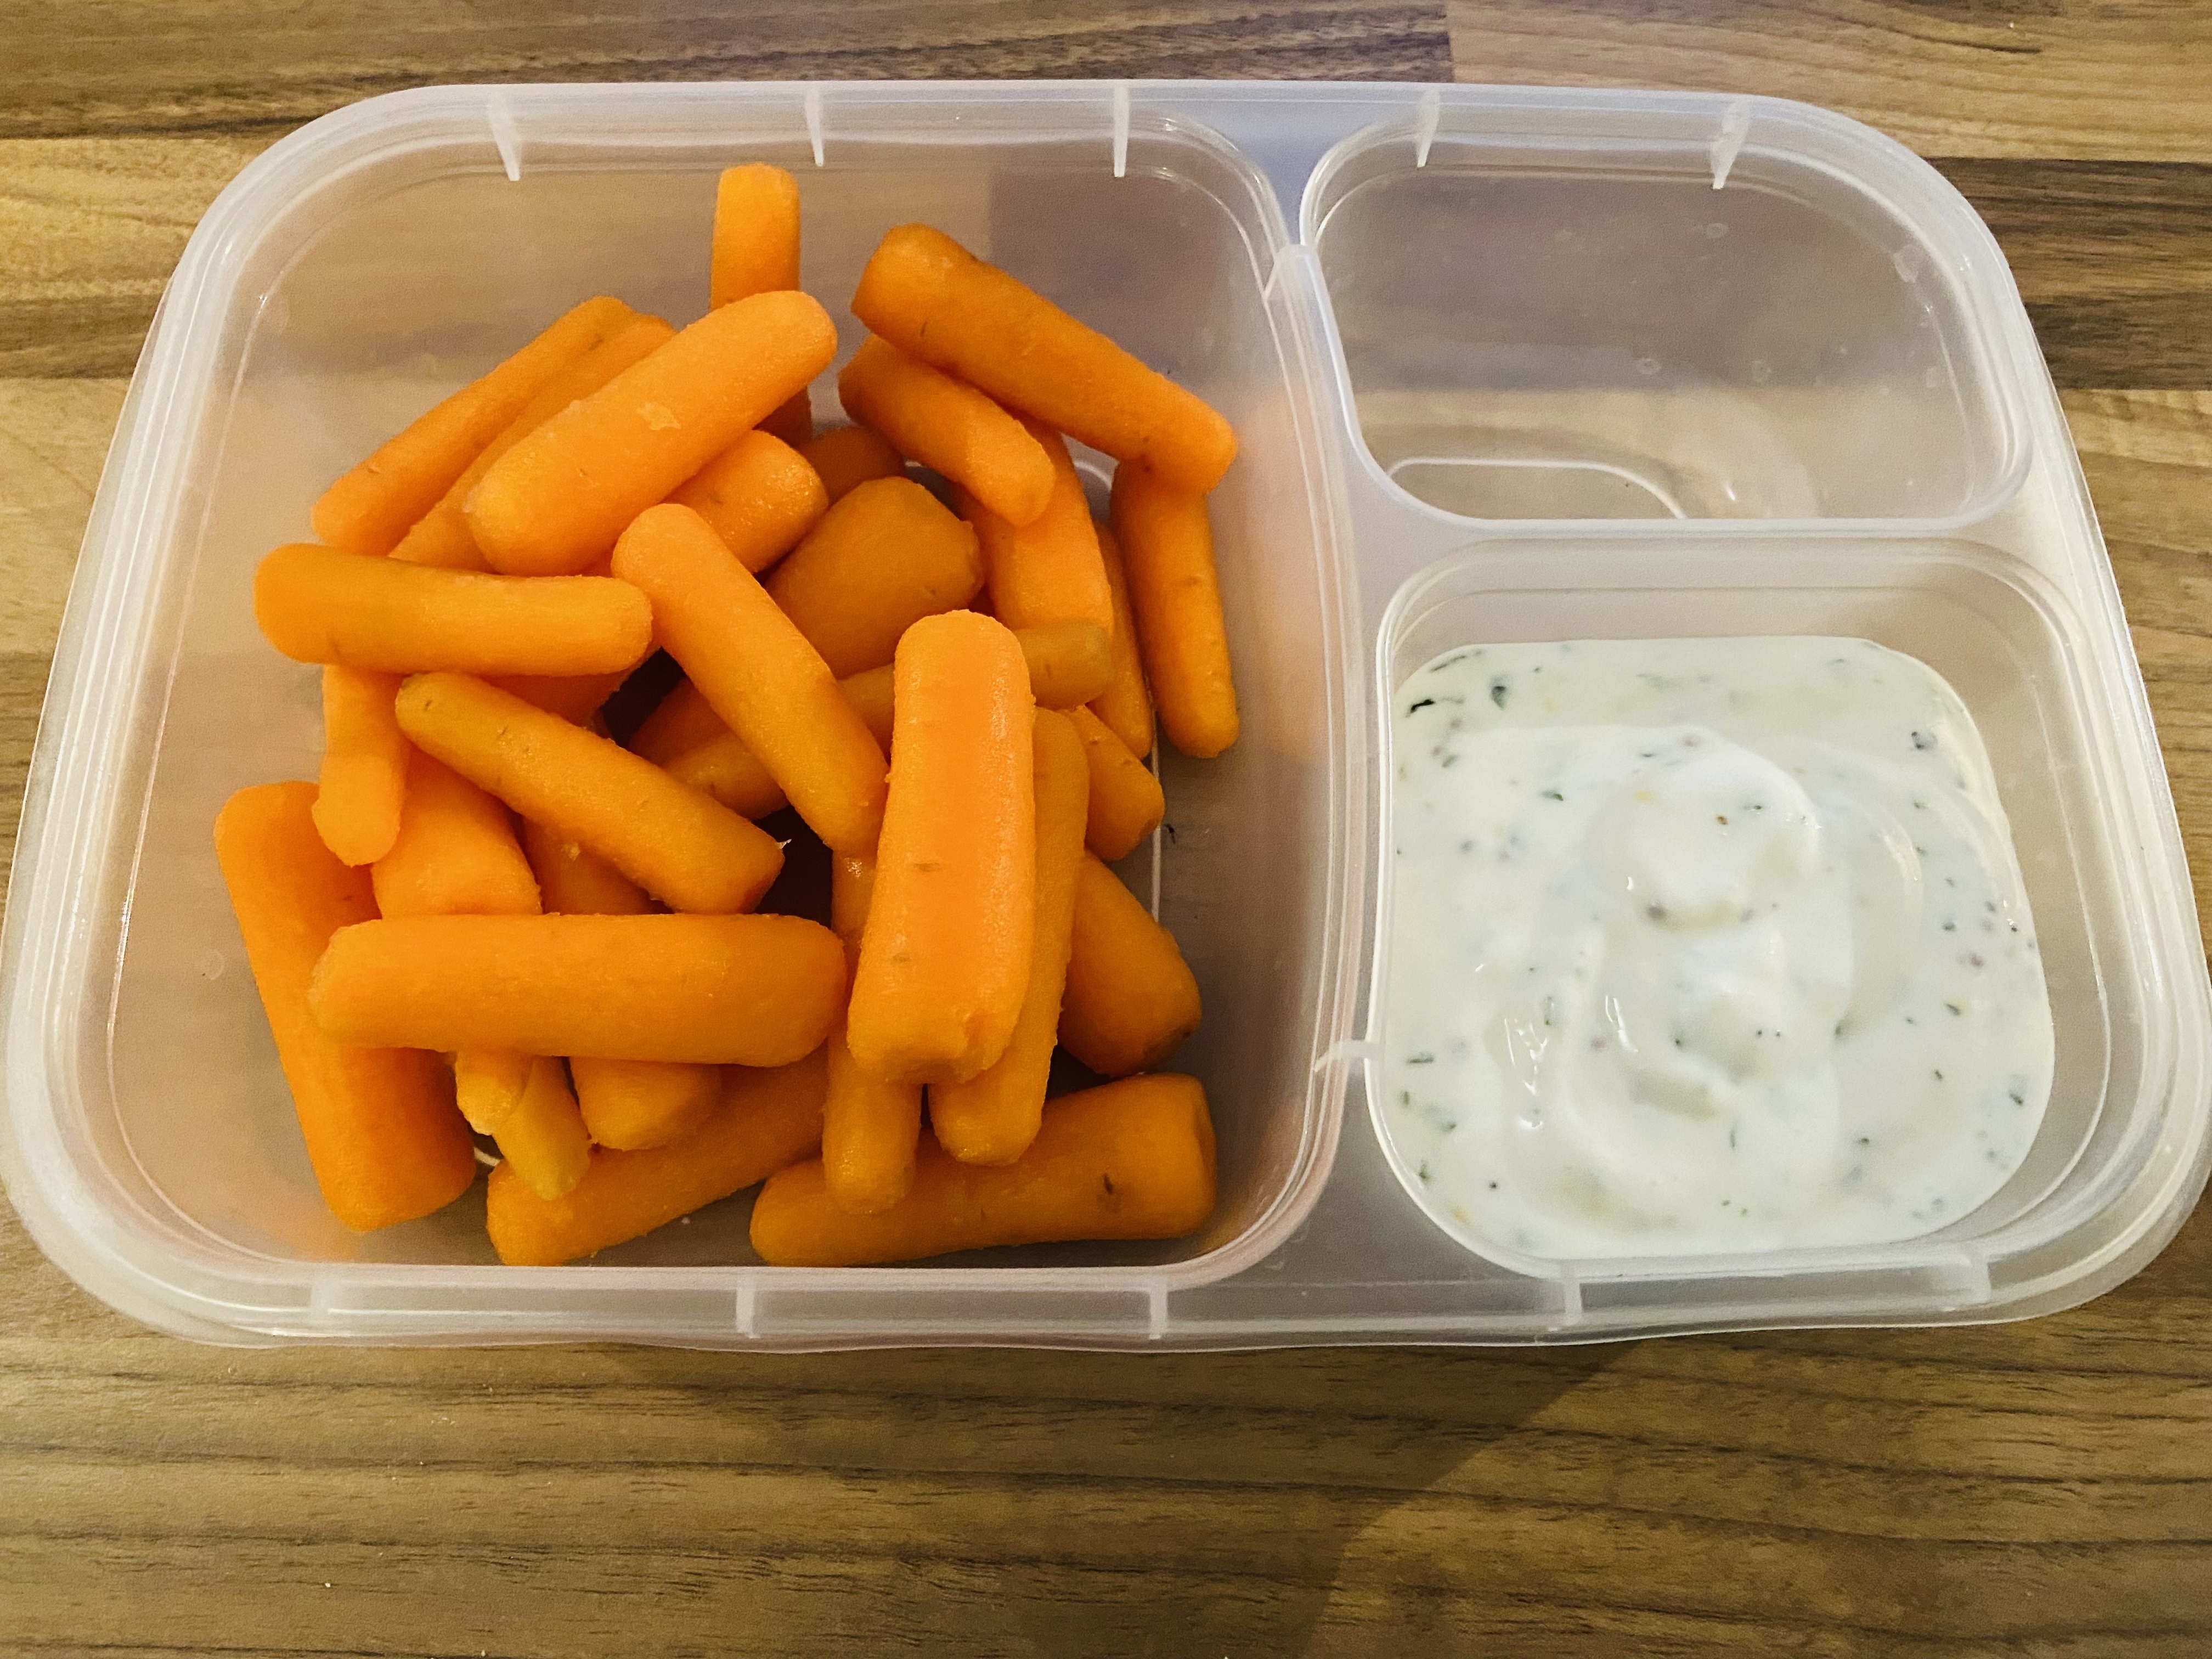 pcos meal plan carrots & yogurt ranch dressing / Healthy Travel Snacks & Hacks for PCOS women